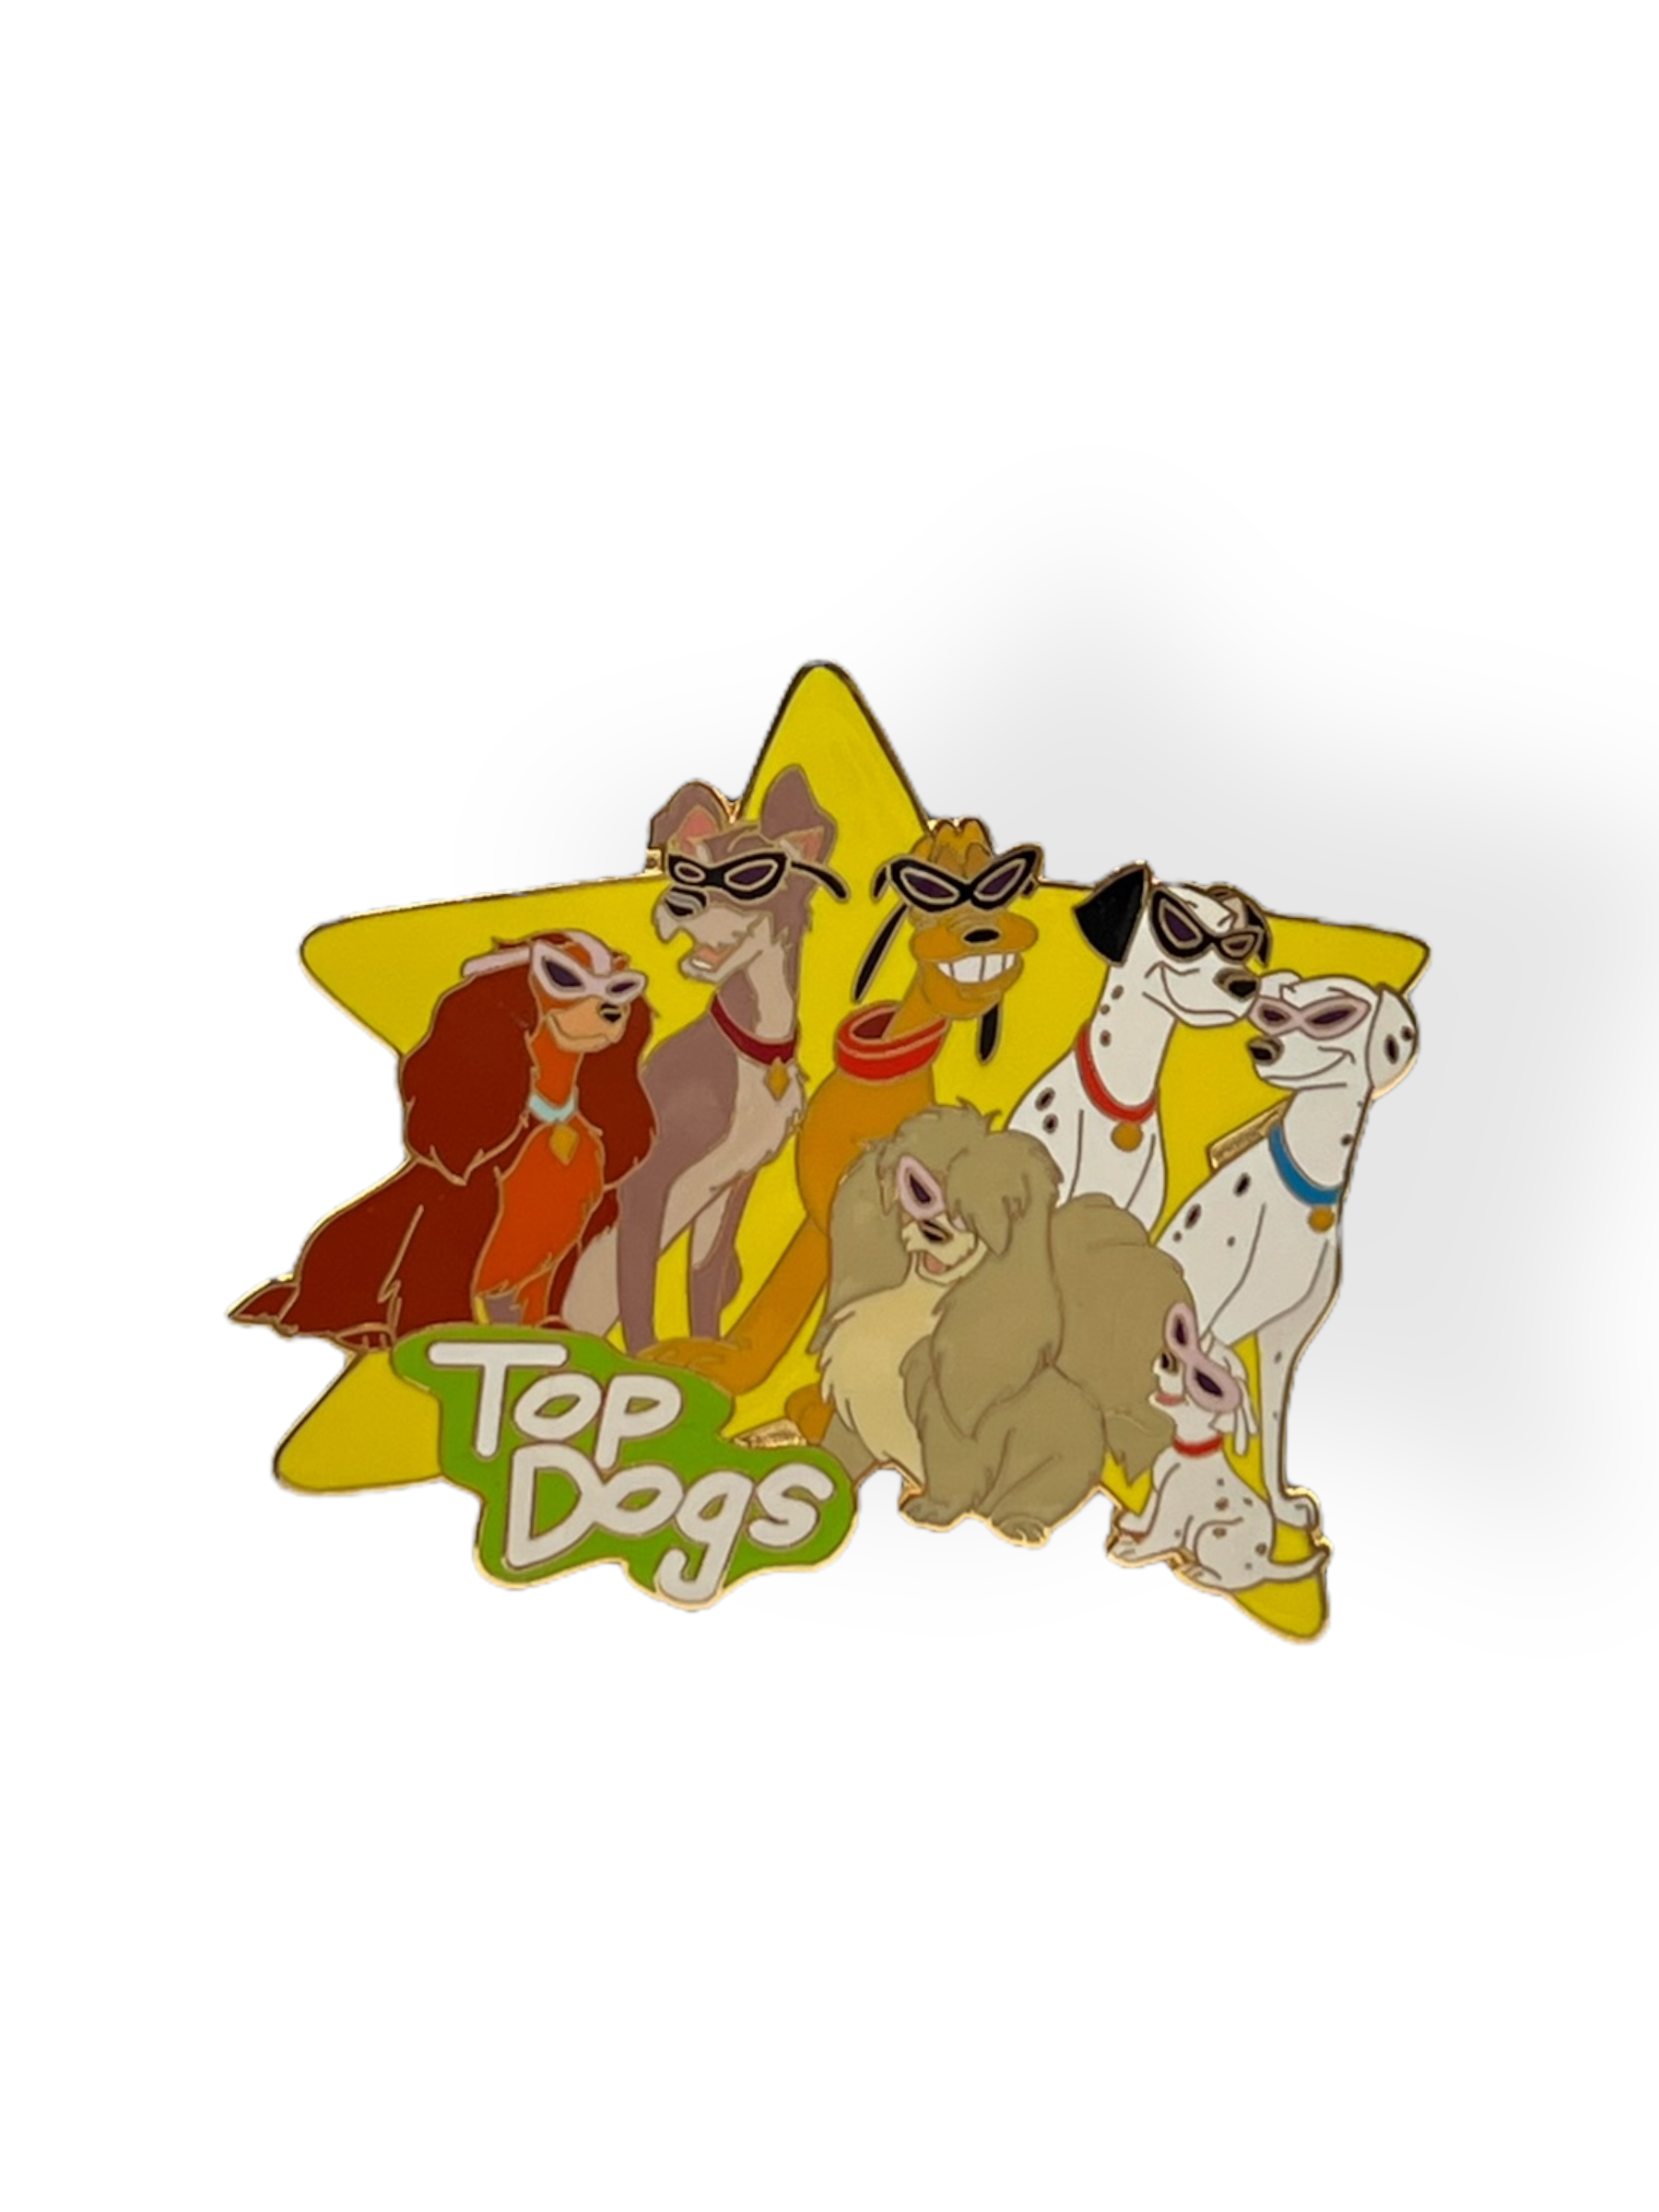 Disney Auctions Top Dog Jumbo Cluster Pin